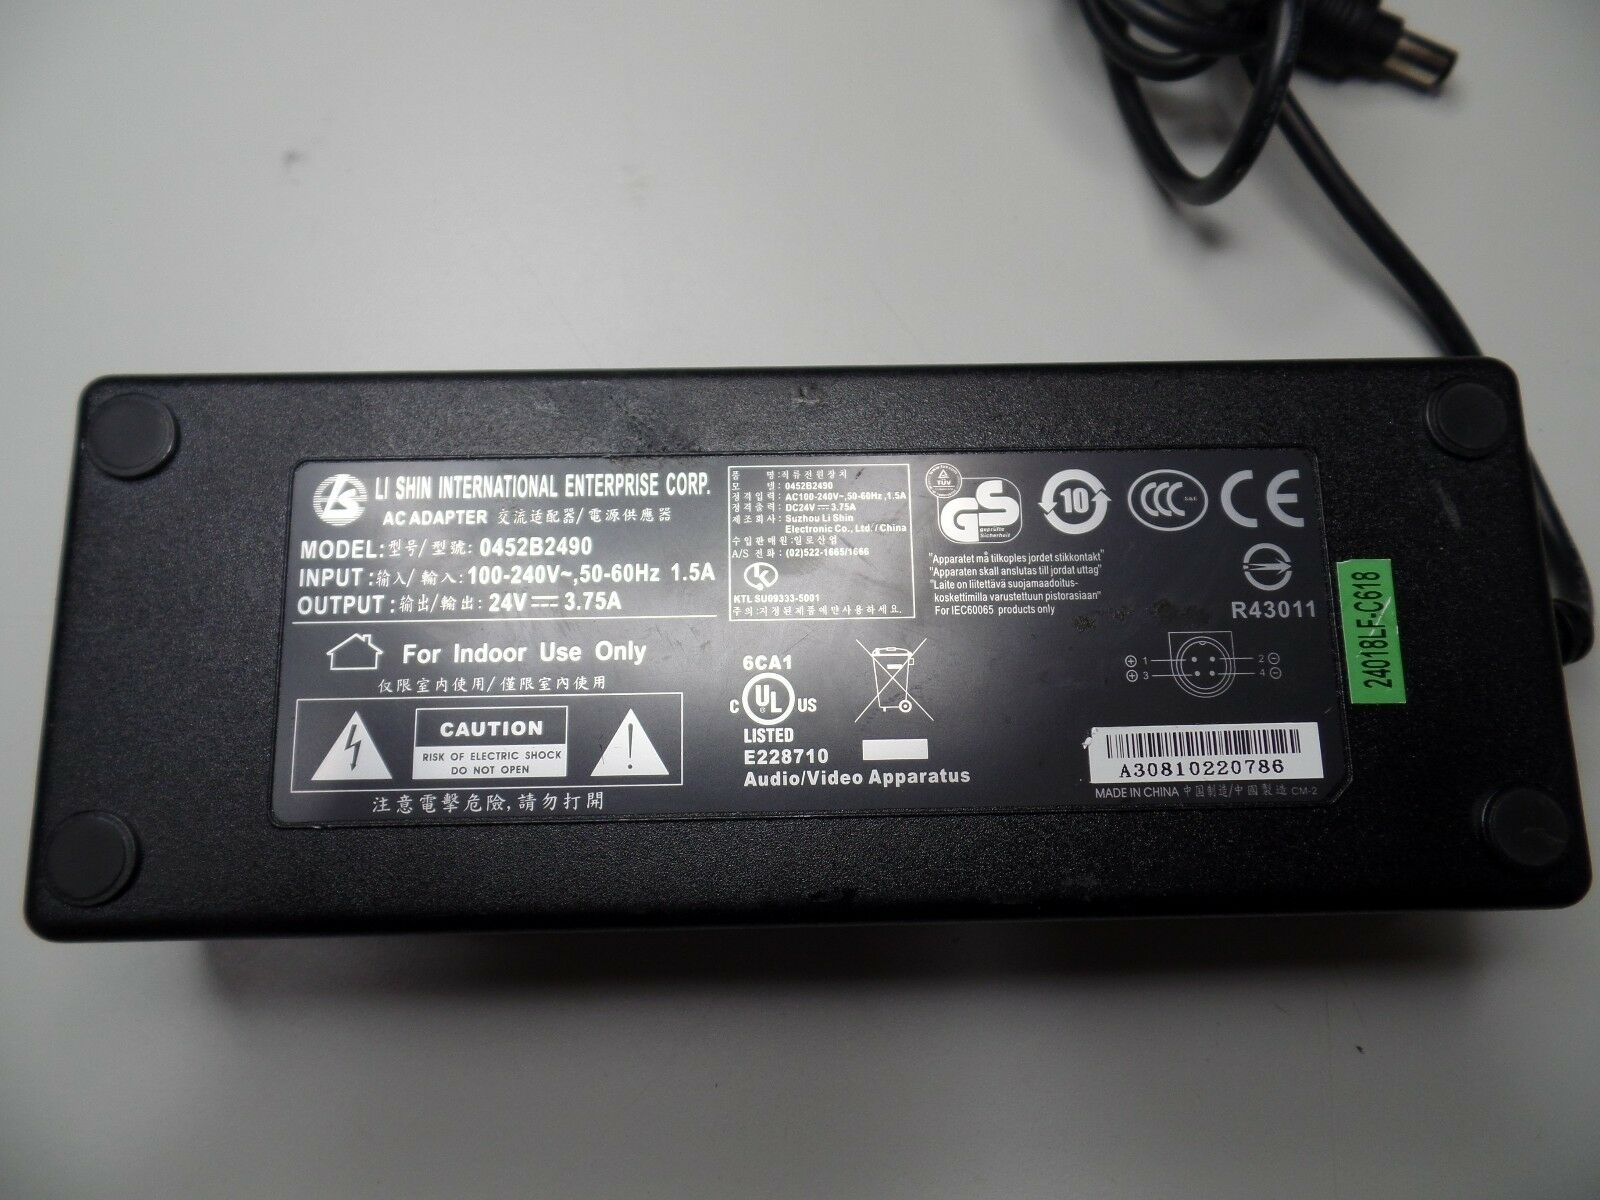 Genuine Li Shin International Enterprise Corp 0452B2490 24V 3.75A Adapter Condition: new Specifications: Genuine Li S